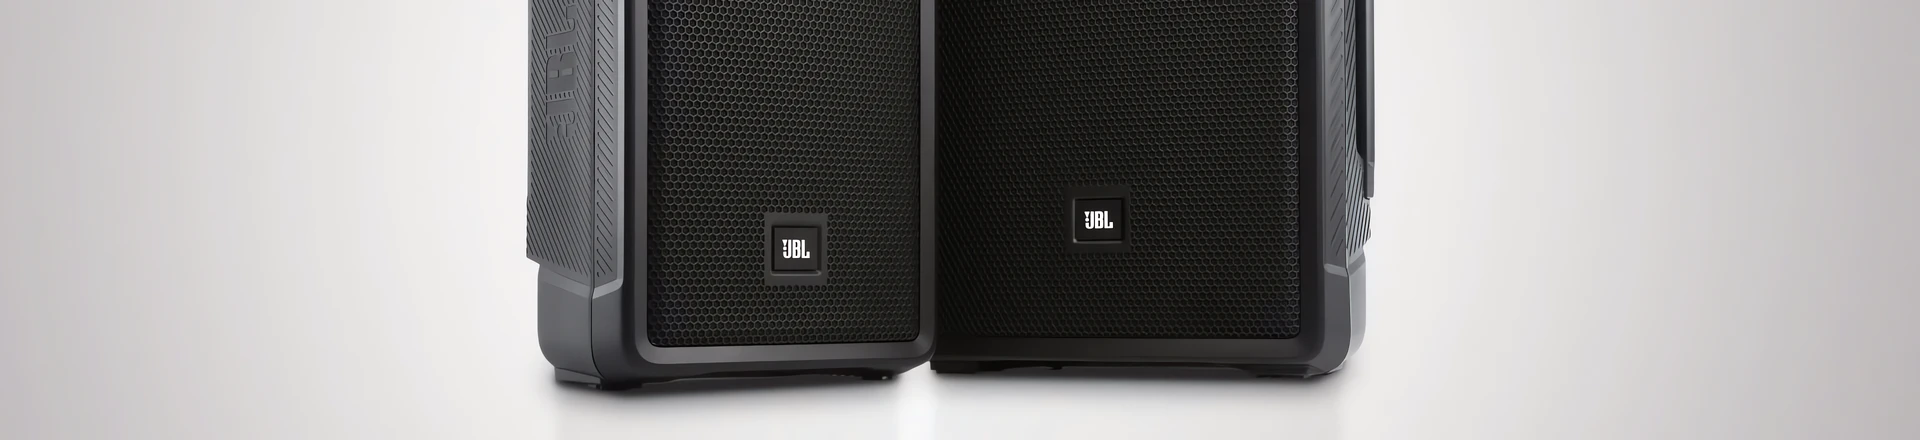 Kup dwie kolumny JBL z serii IRX, a otrzymasz mikser Soundcraft Notepad GRATIS!